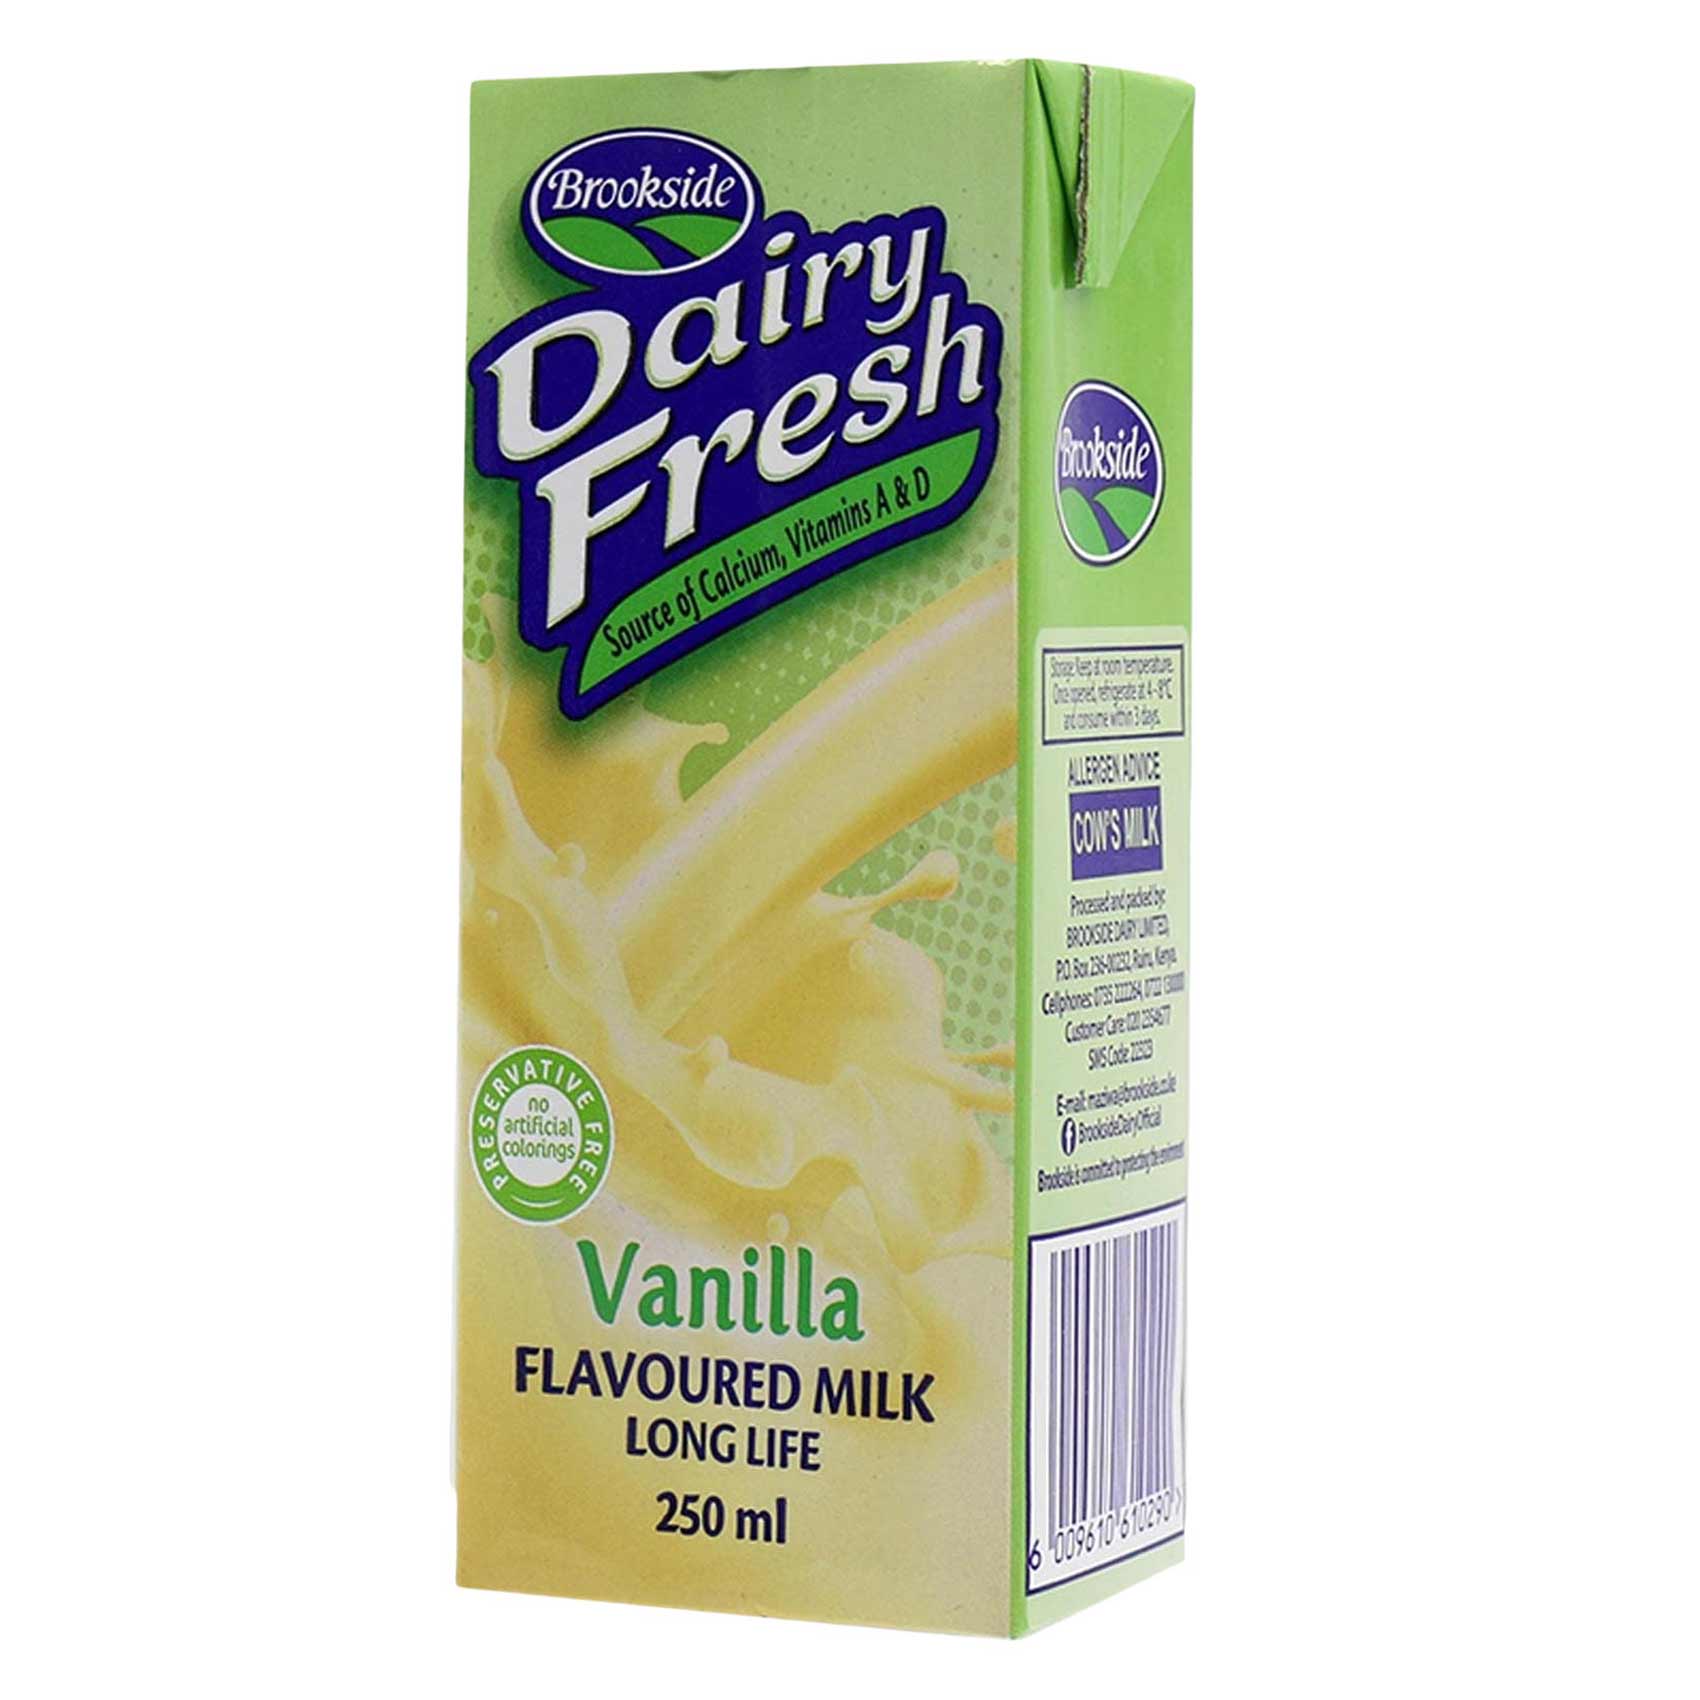 Brookside Dairy Fresh  Vanilla Flavoured Milk 250ml - Long Life